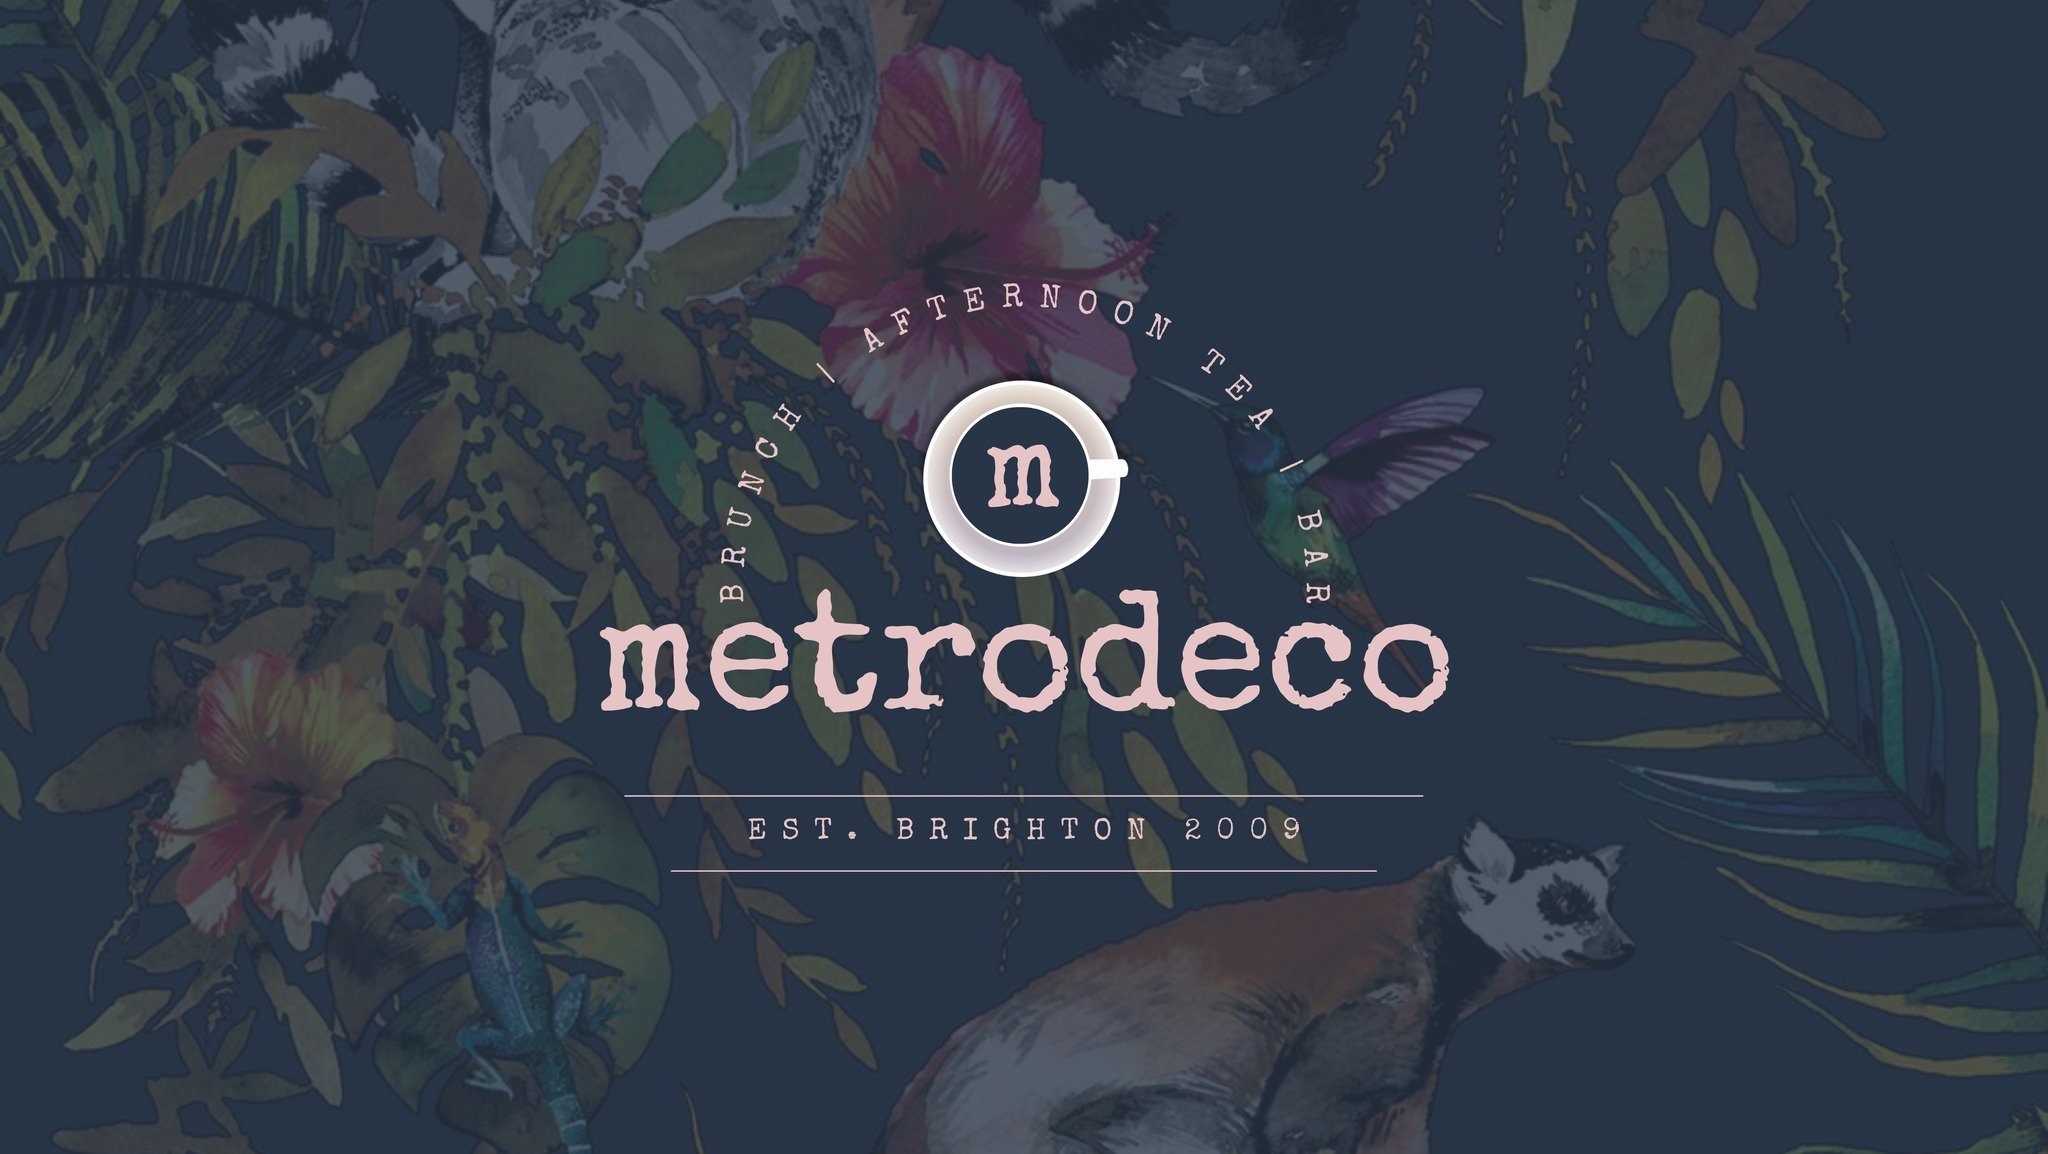 Metro Deco Logo Image.jpeg